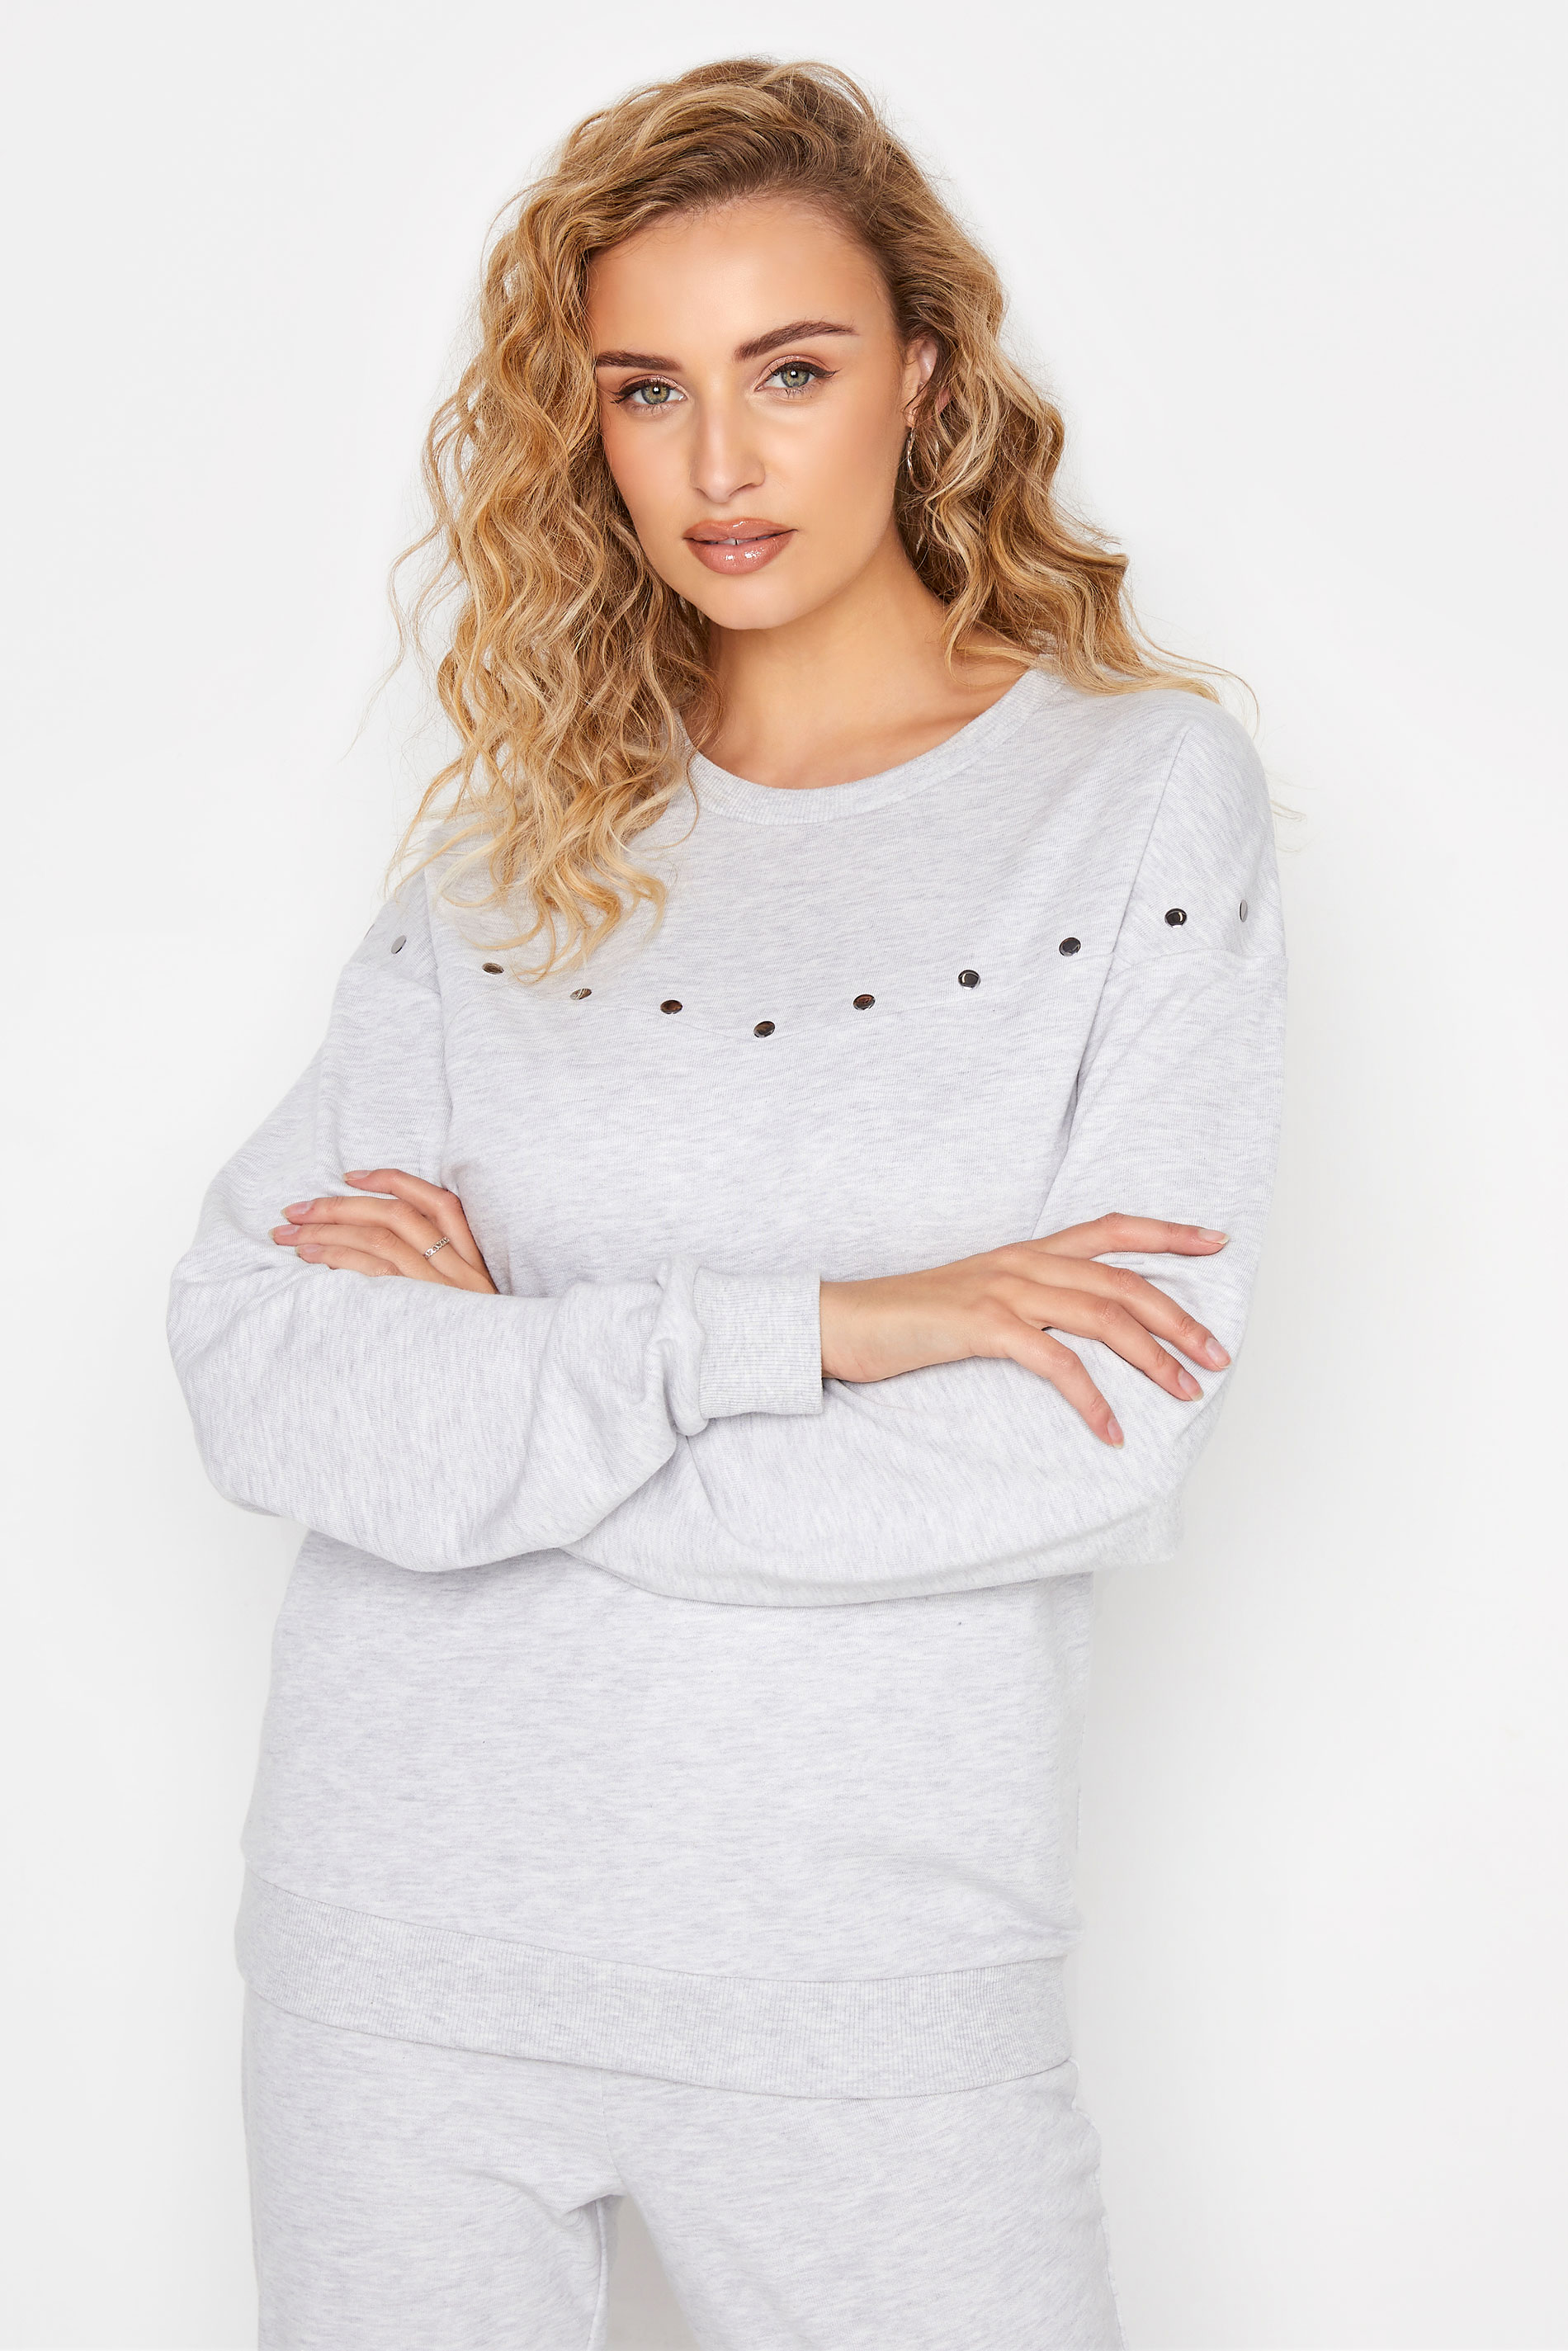 Tall Women's LTS Grey Stud Detail Sweatshirt | Long Tall Sally 1